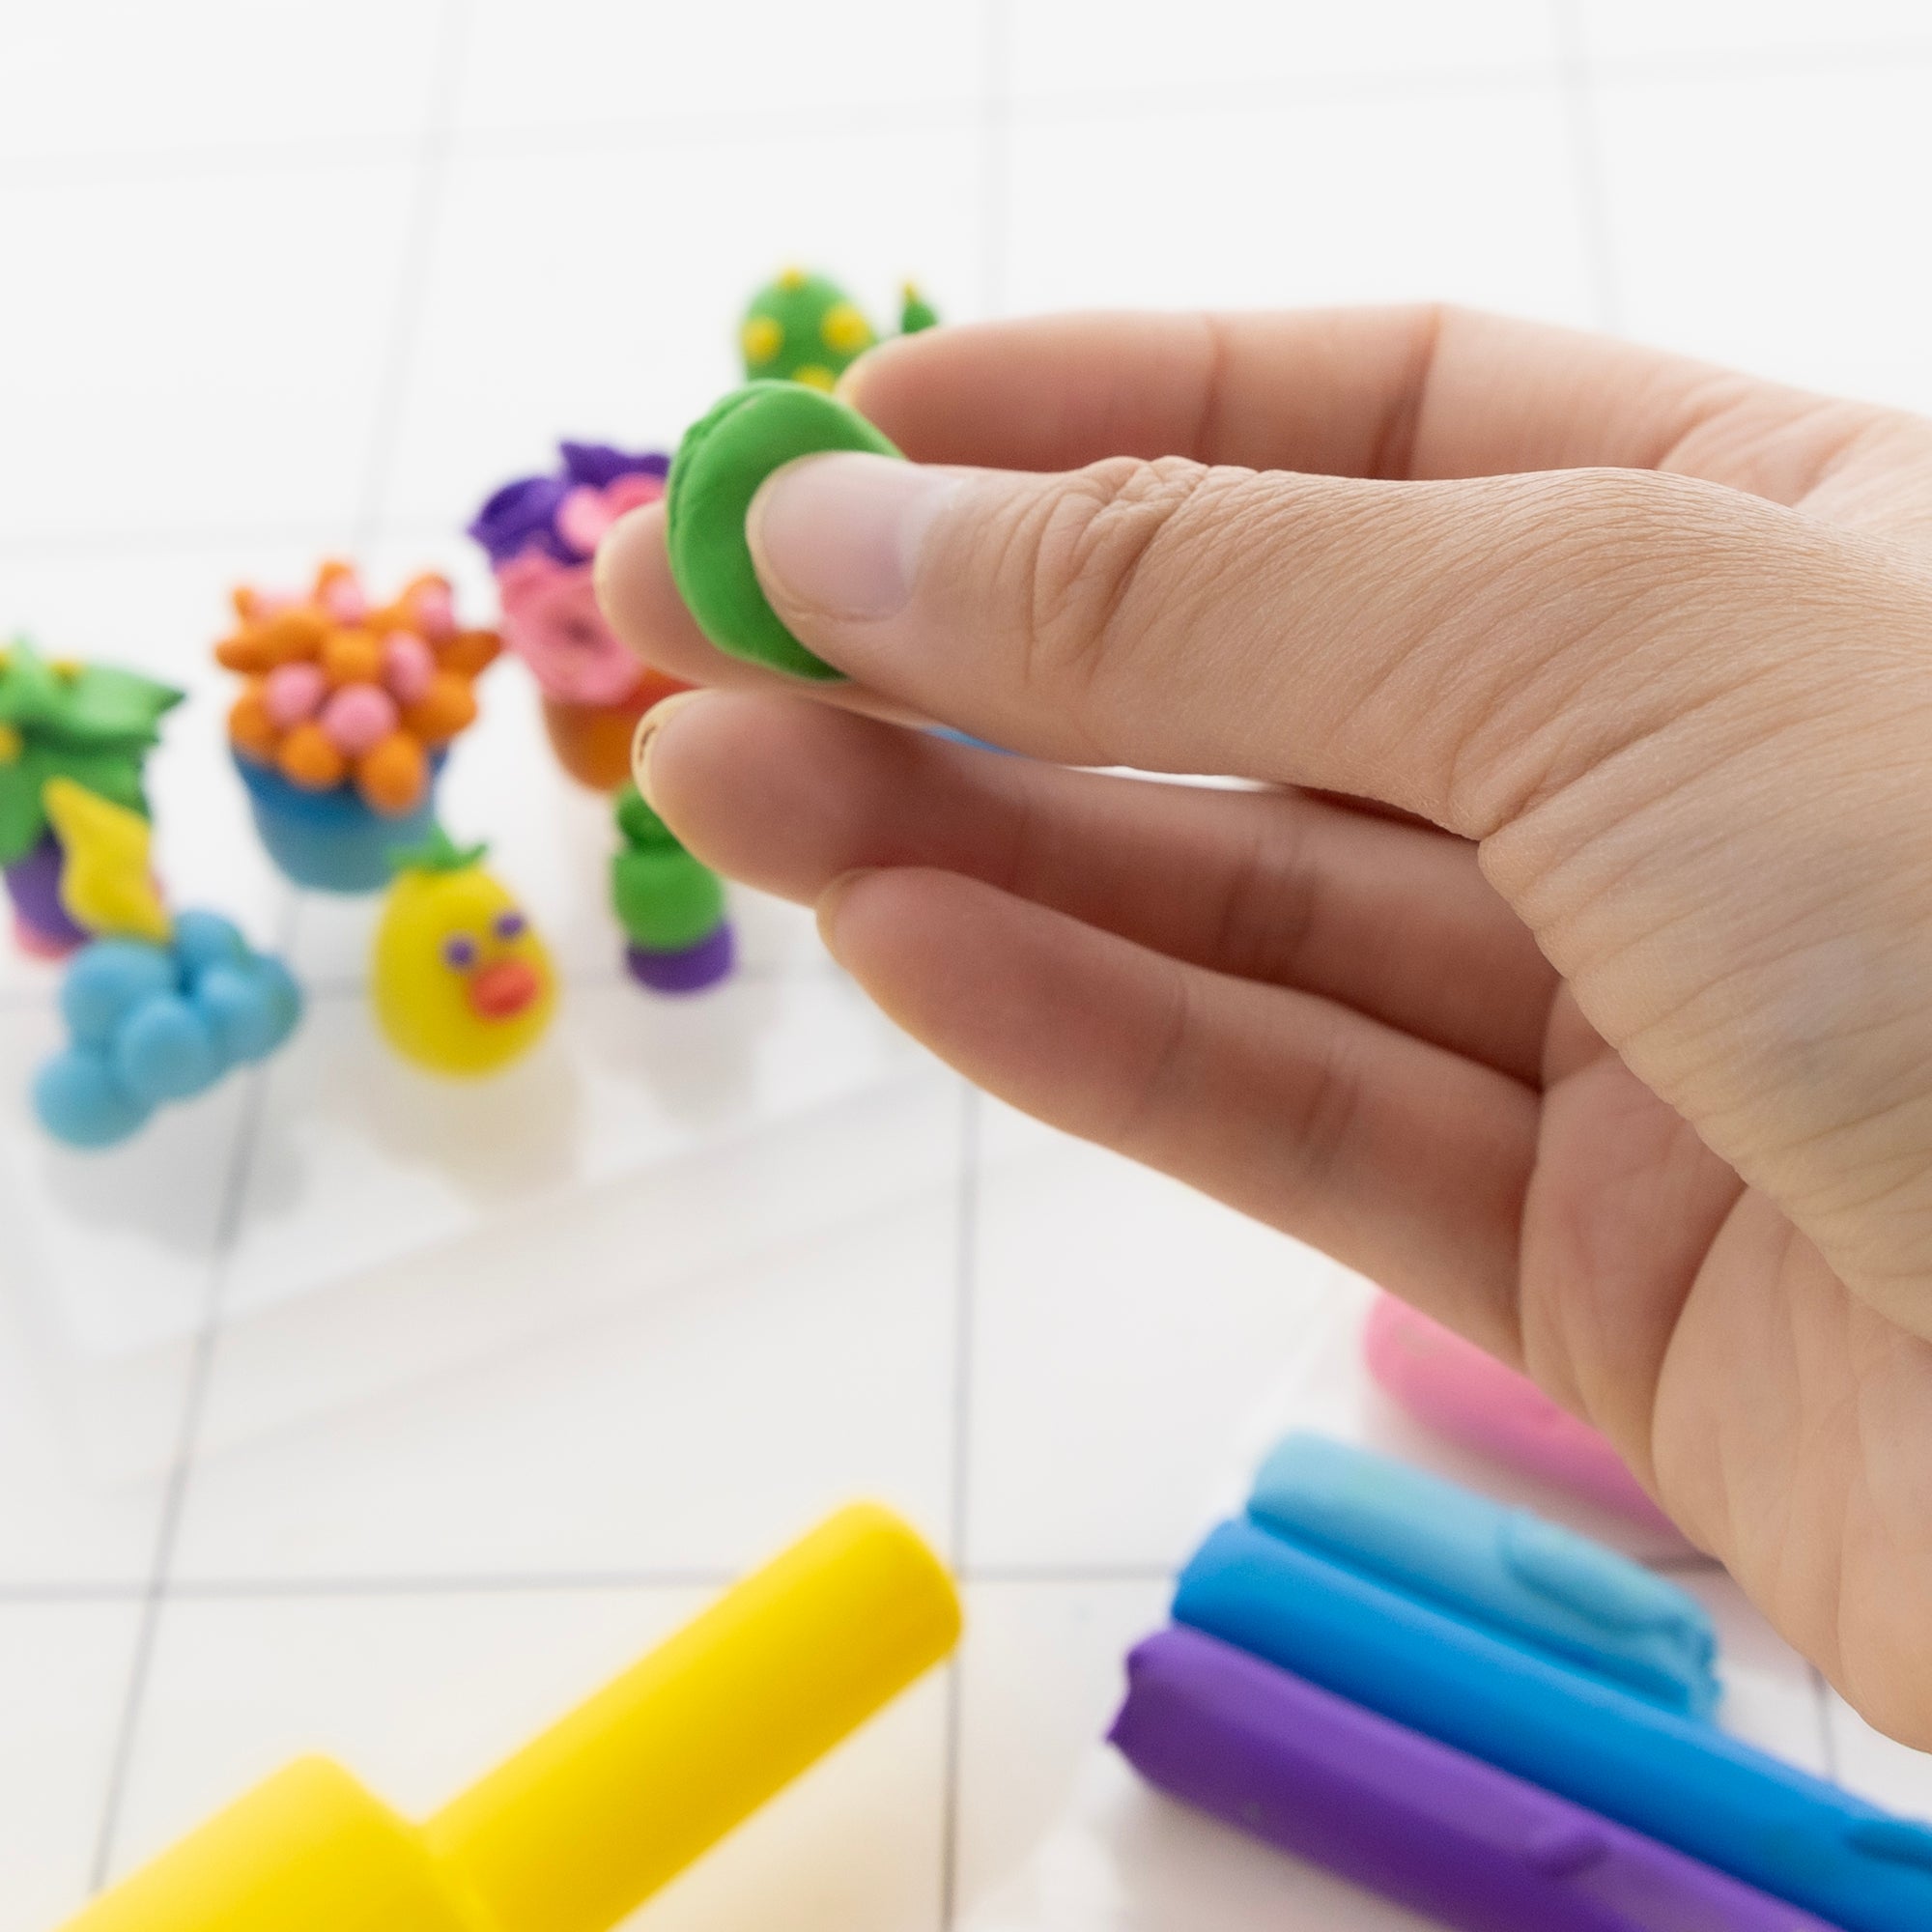 DIY Colorful Plasticine Toy Box Set, 8 Colors Modeling Clay Playdough Set,  Plasticine Modeling Clay Kit Kids' Art Clay & Dough, Plasticine Craft Toys